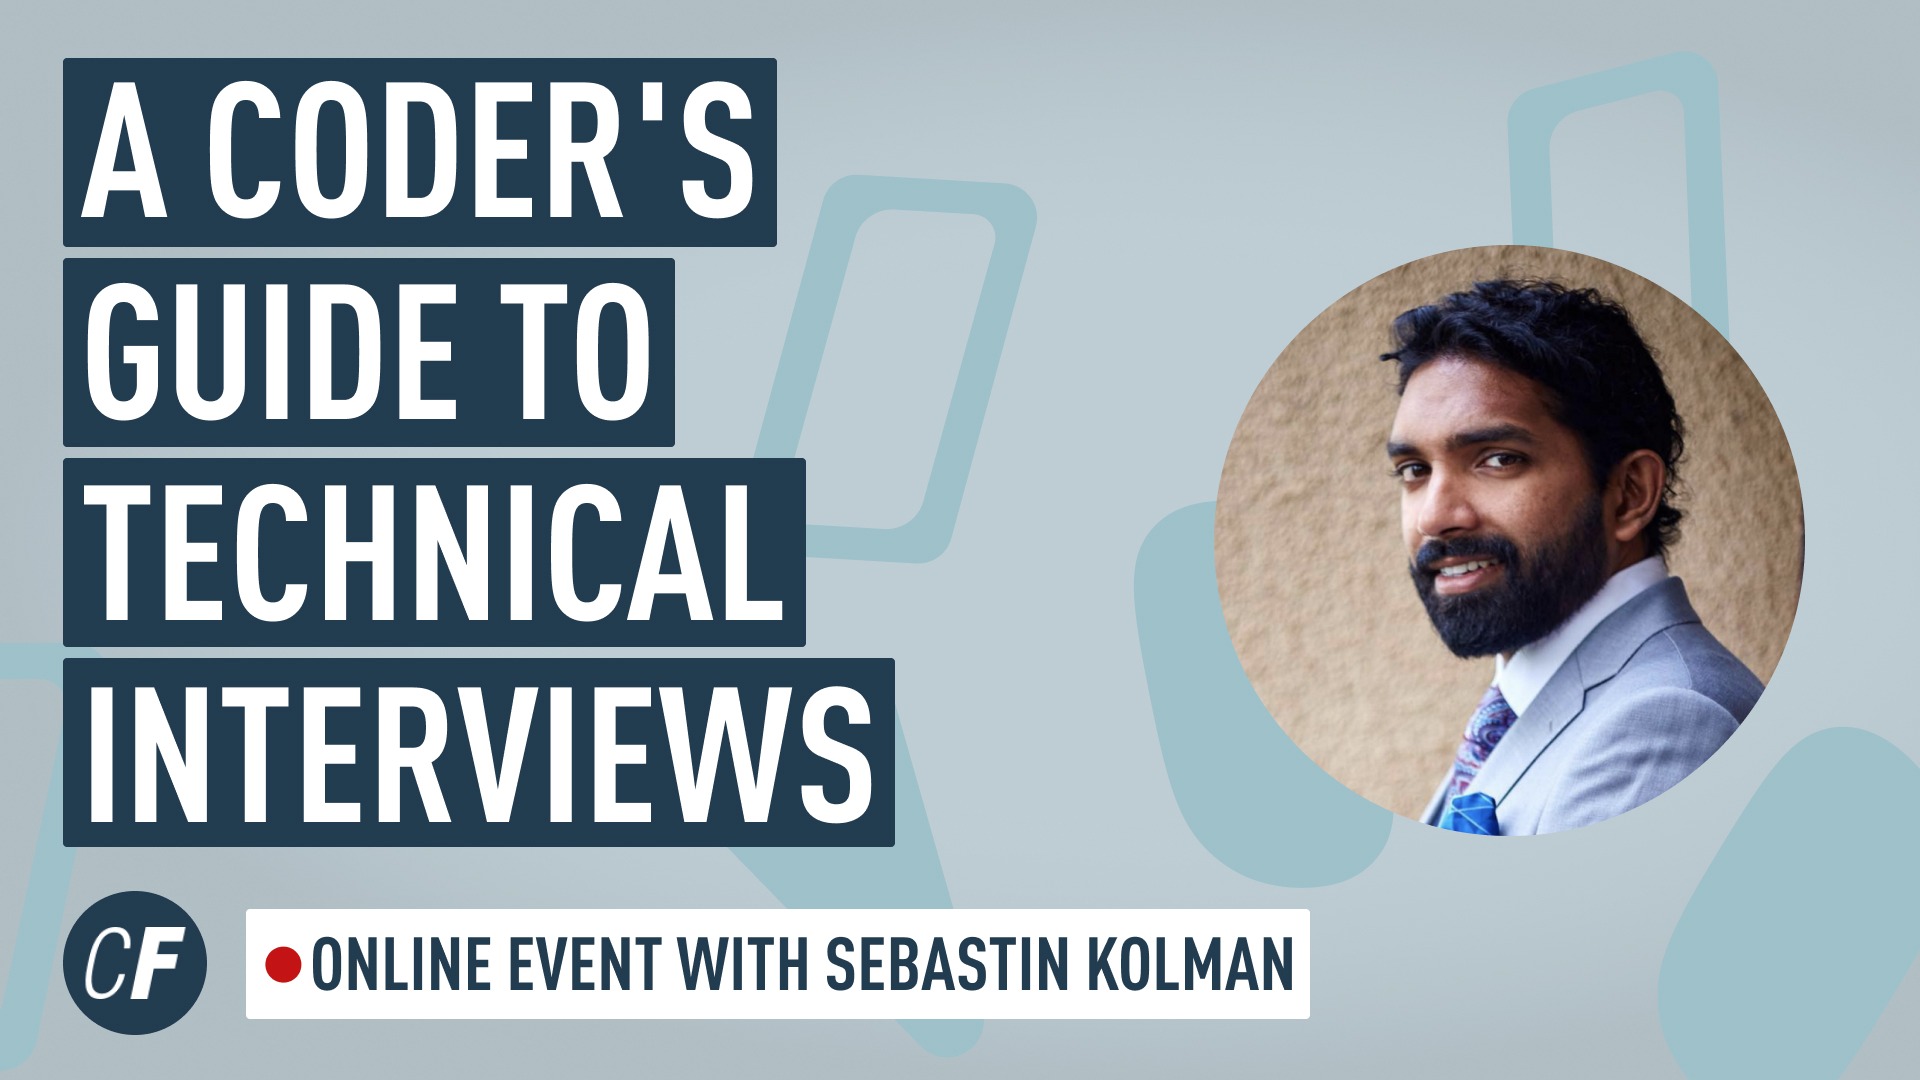 A coder's guide to technical interviews. Online event with Sebastin Kolman